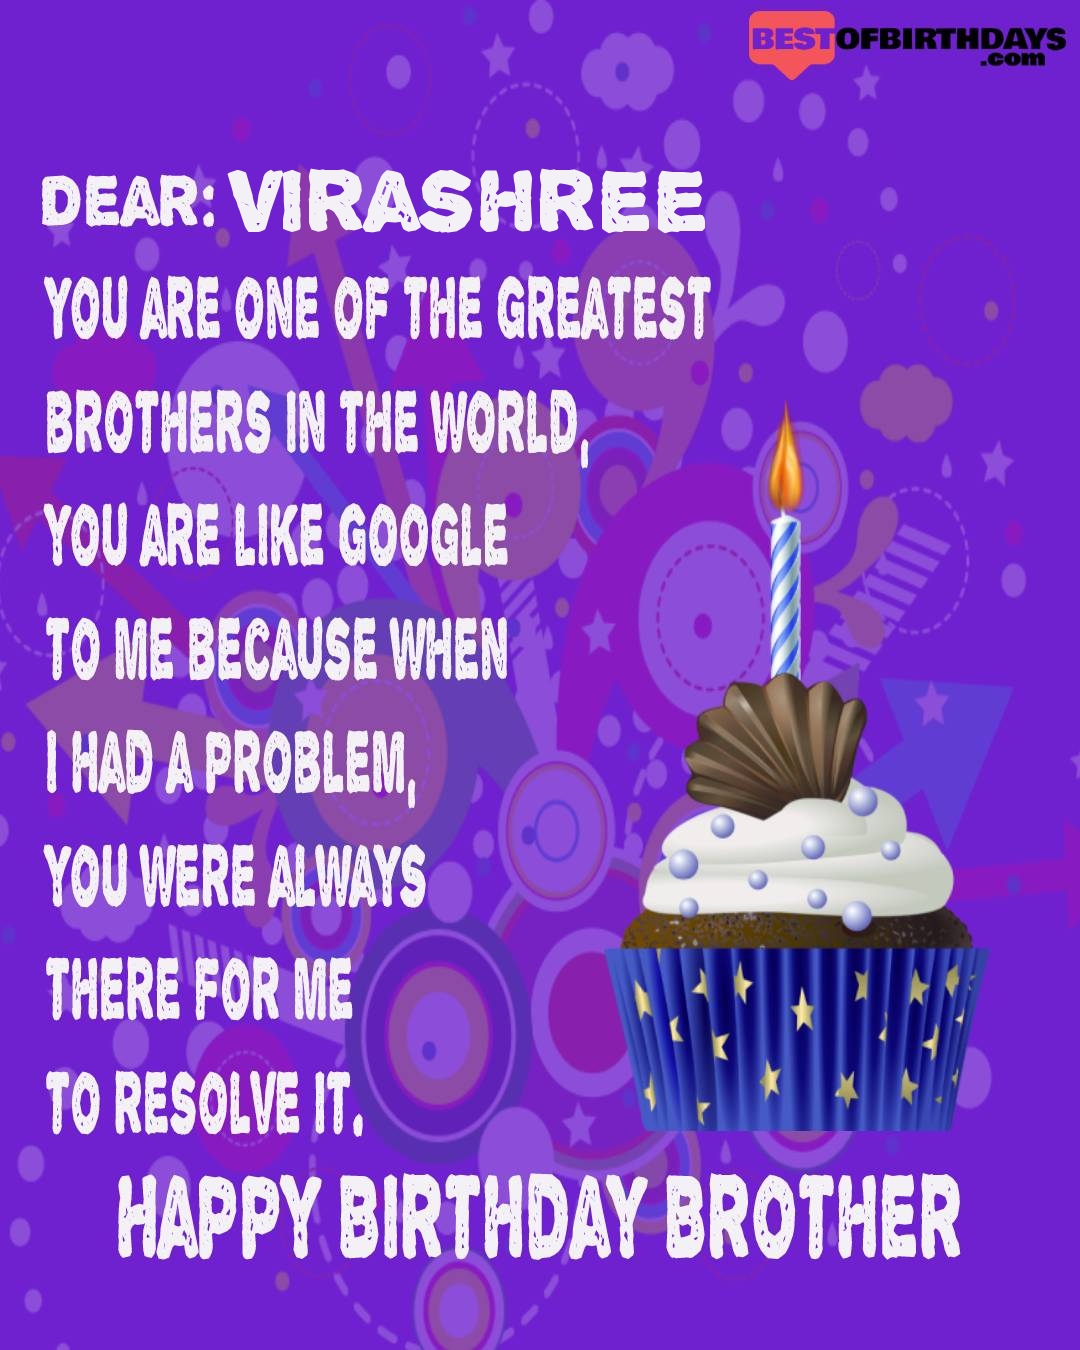 Happy birthday virashree bhai brother bro